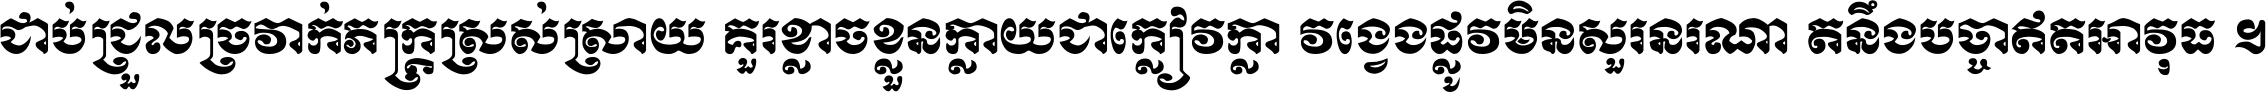 Khmer MEF2